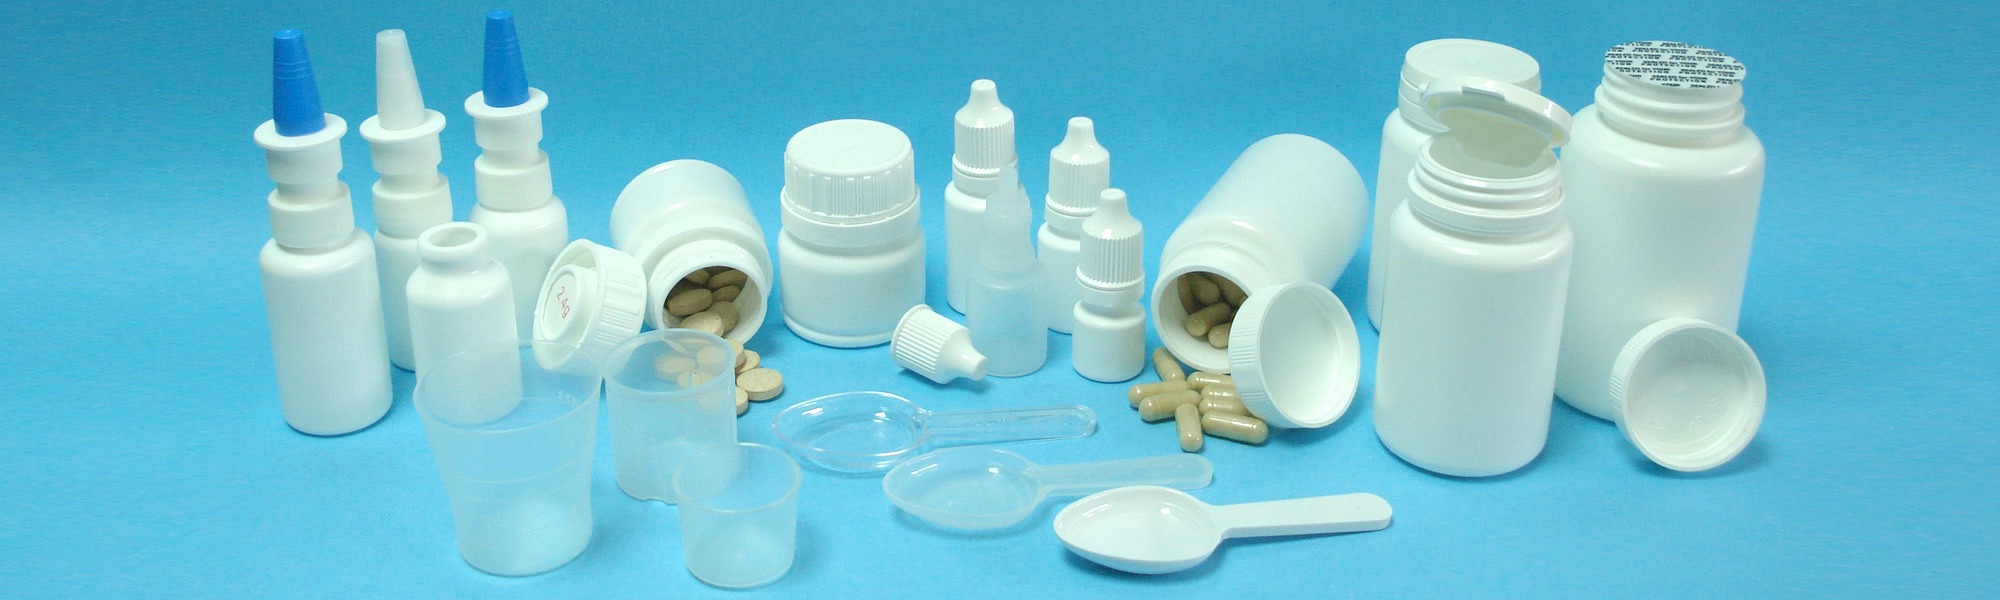 Why choose PlasticProgress Pharma Packaging